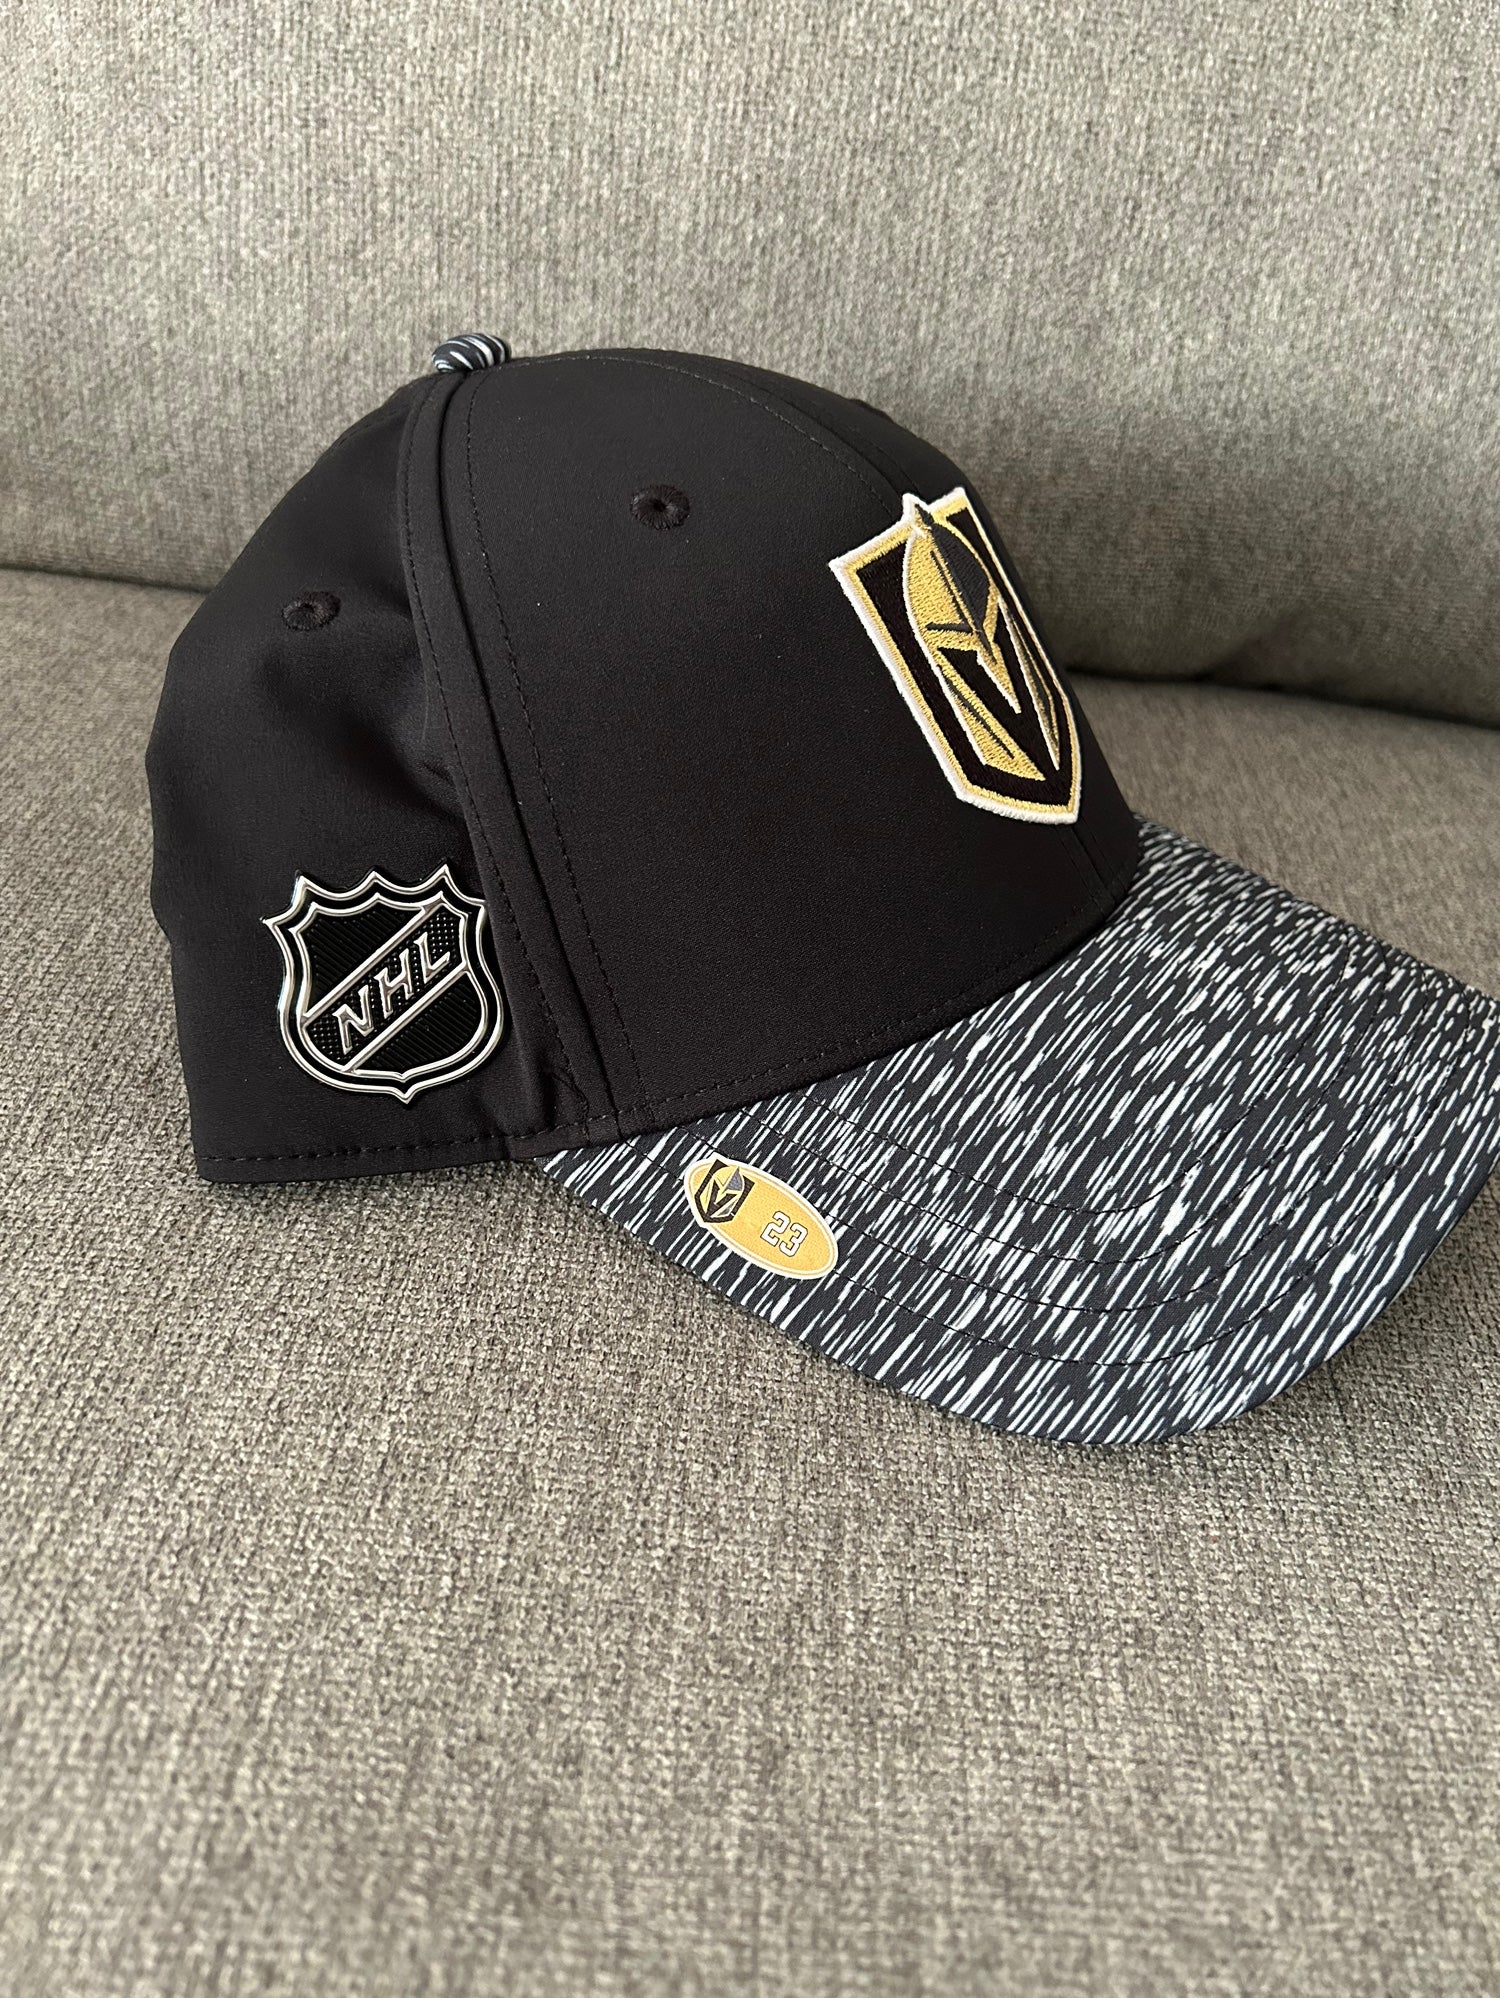 Fanatics Brand / NHL Las Vegas Golden Knights Authentic Pro